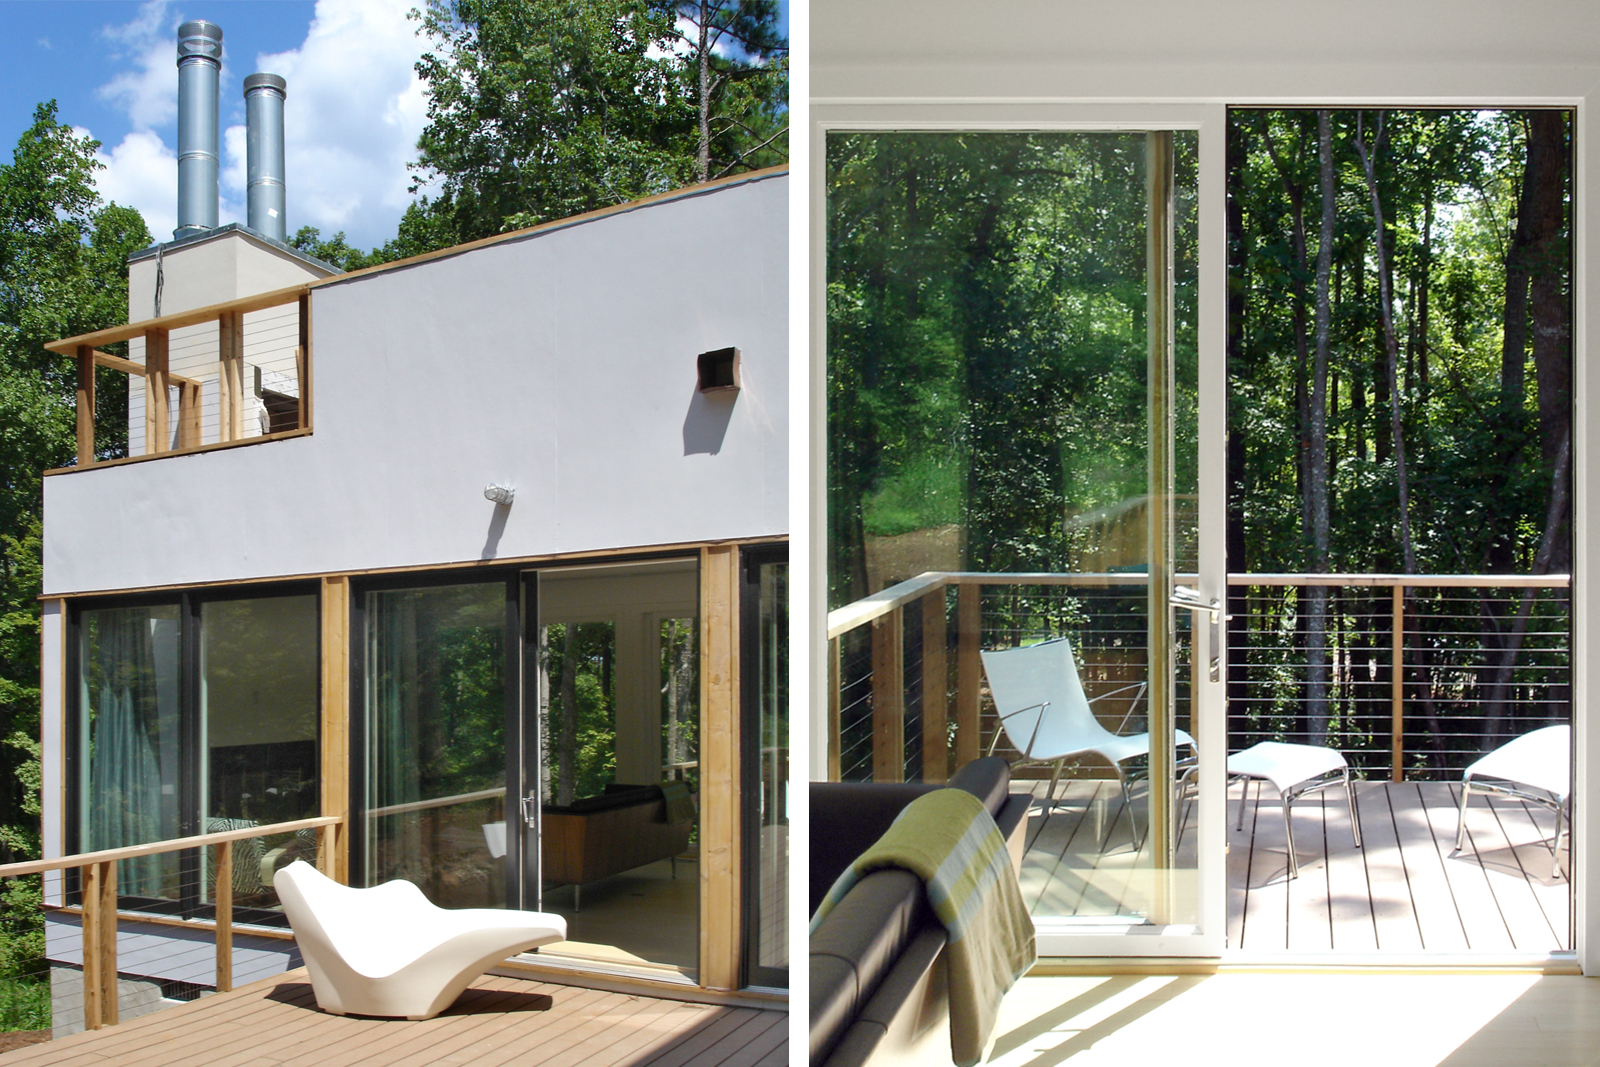 08-res4-resolution-4-architecture-modern-modular-house-prefab-dwell-home-exterior-interior.jpg